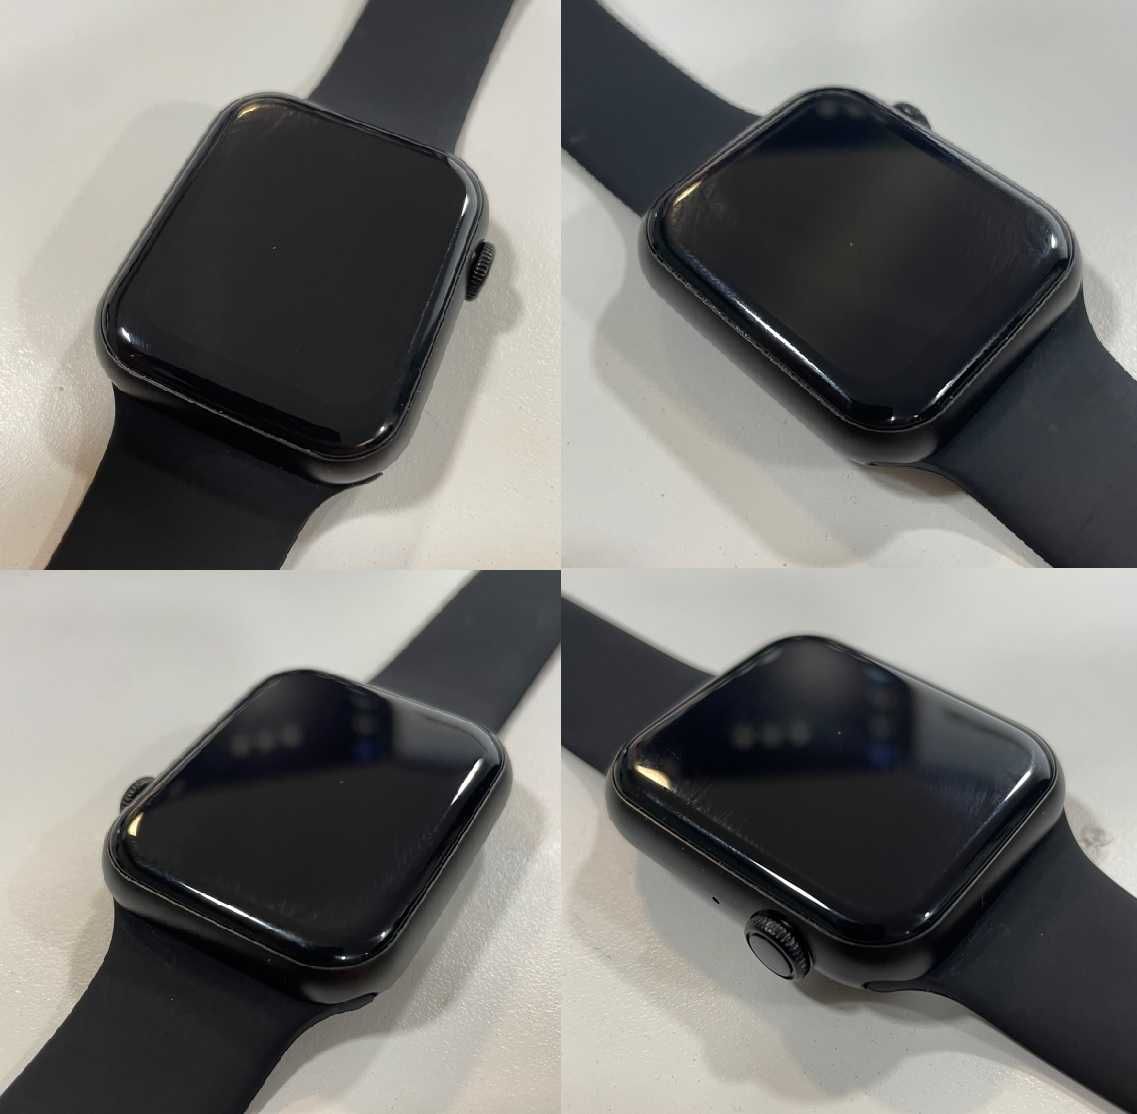 Smartwatch Allview Connect Z - NOU - Apple Watch style - doar UNBOXING